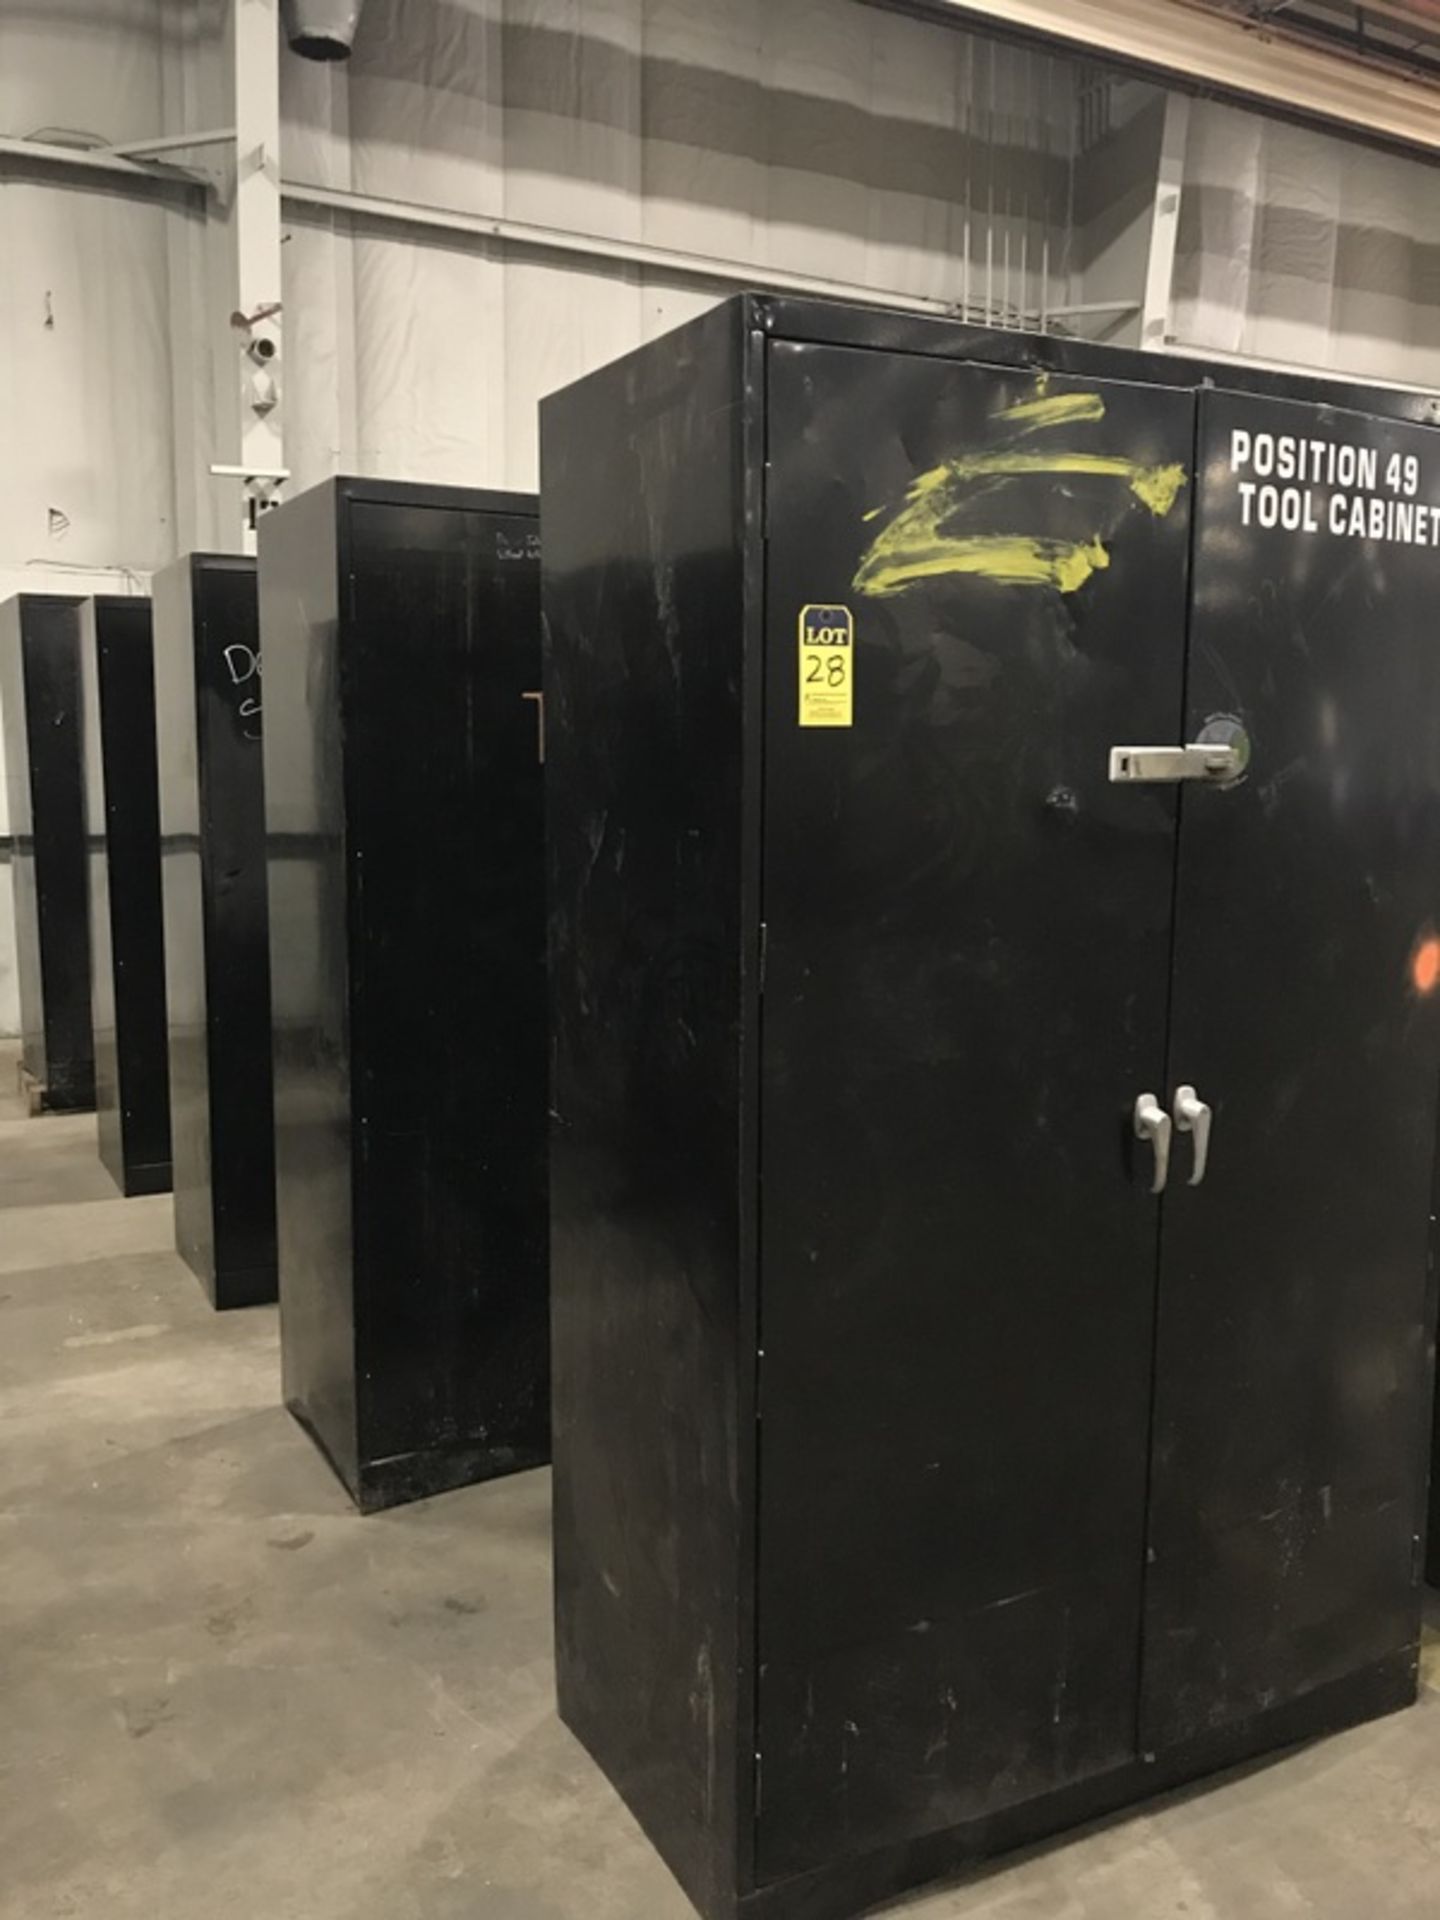 5 metal storage cabinets